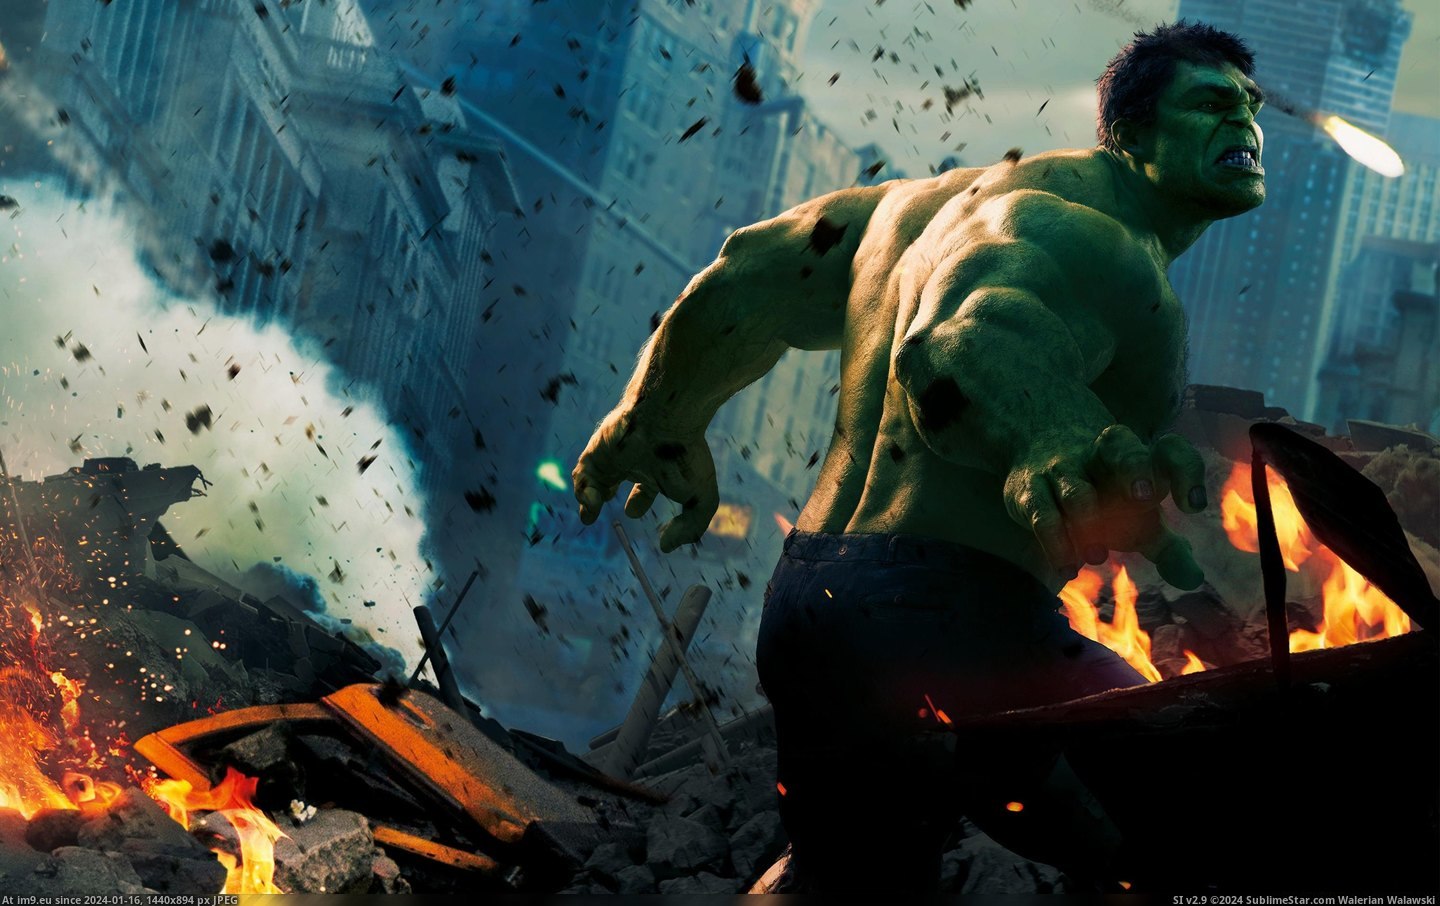 #Wallpaper #Avengers #Hulk #Wide Hulk In 2012 Avengers Wide HD Wallpaper Pic. (Bild von album Unique HD Wallpapers))